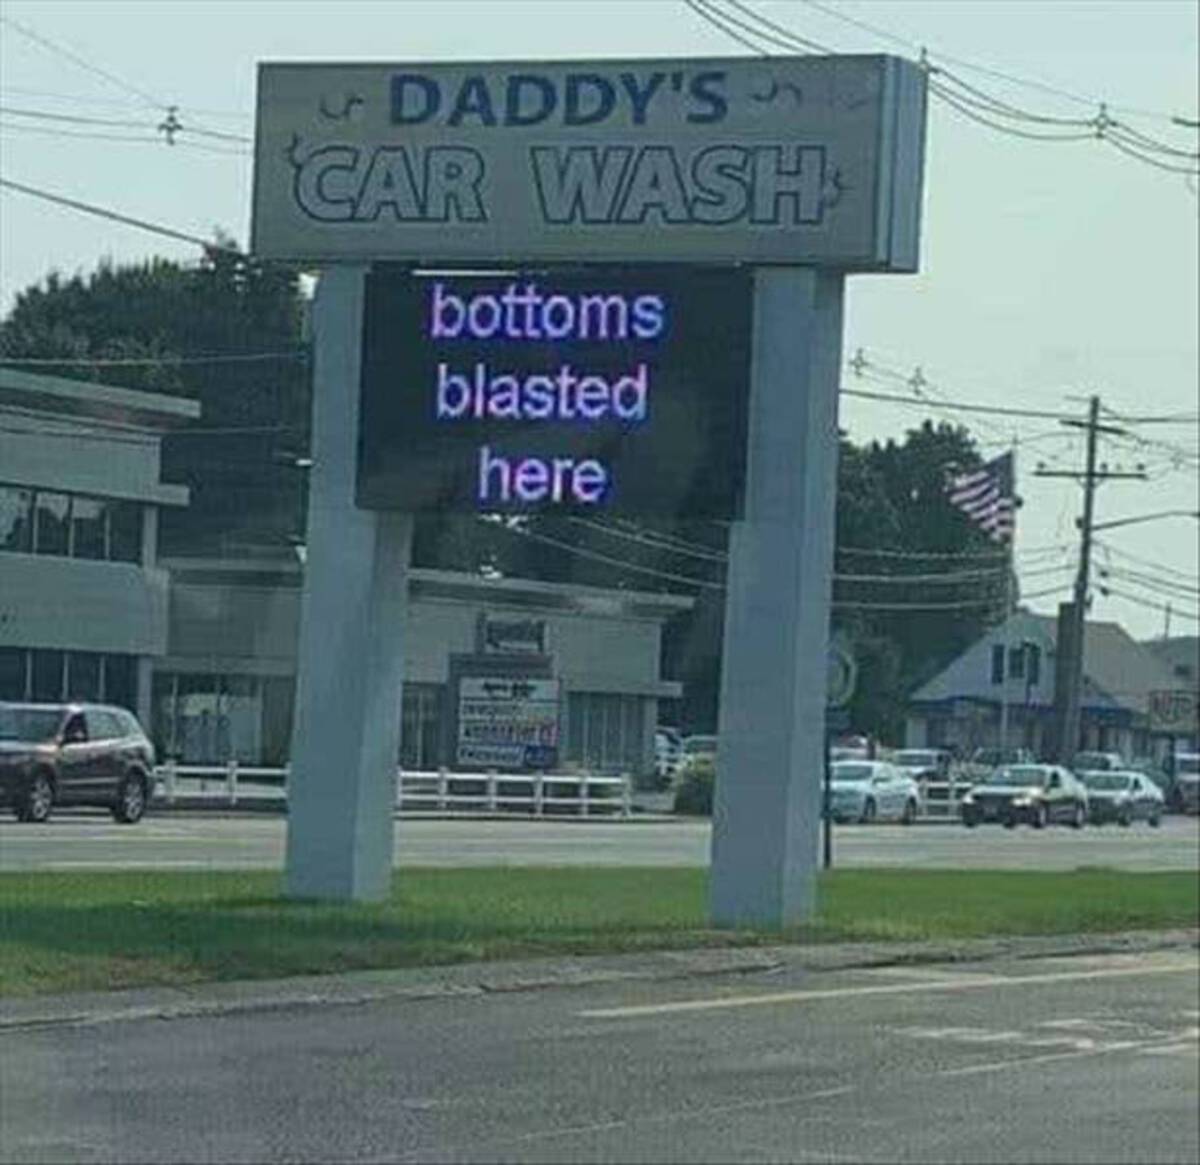 daddy's car wash meme - Daddy'S Car Wash bottoms blasted here